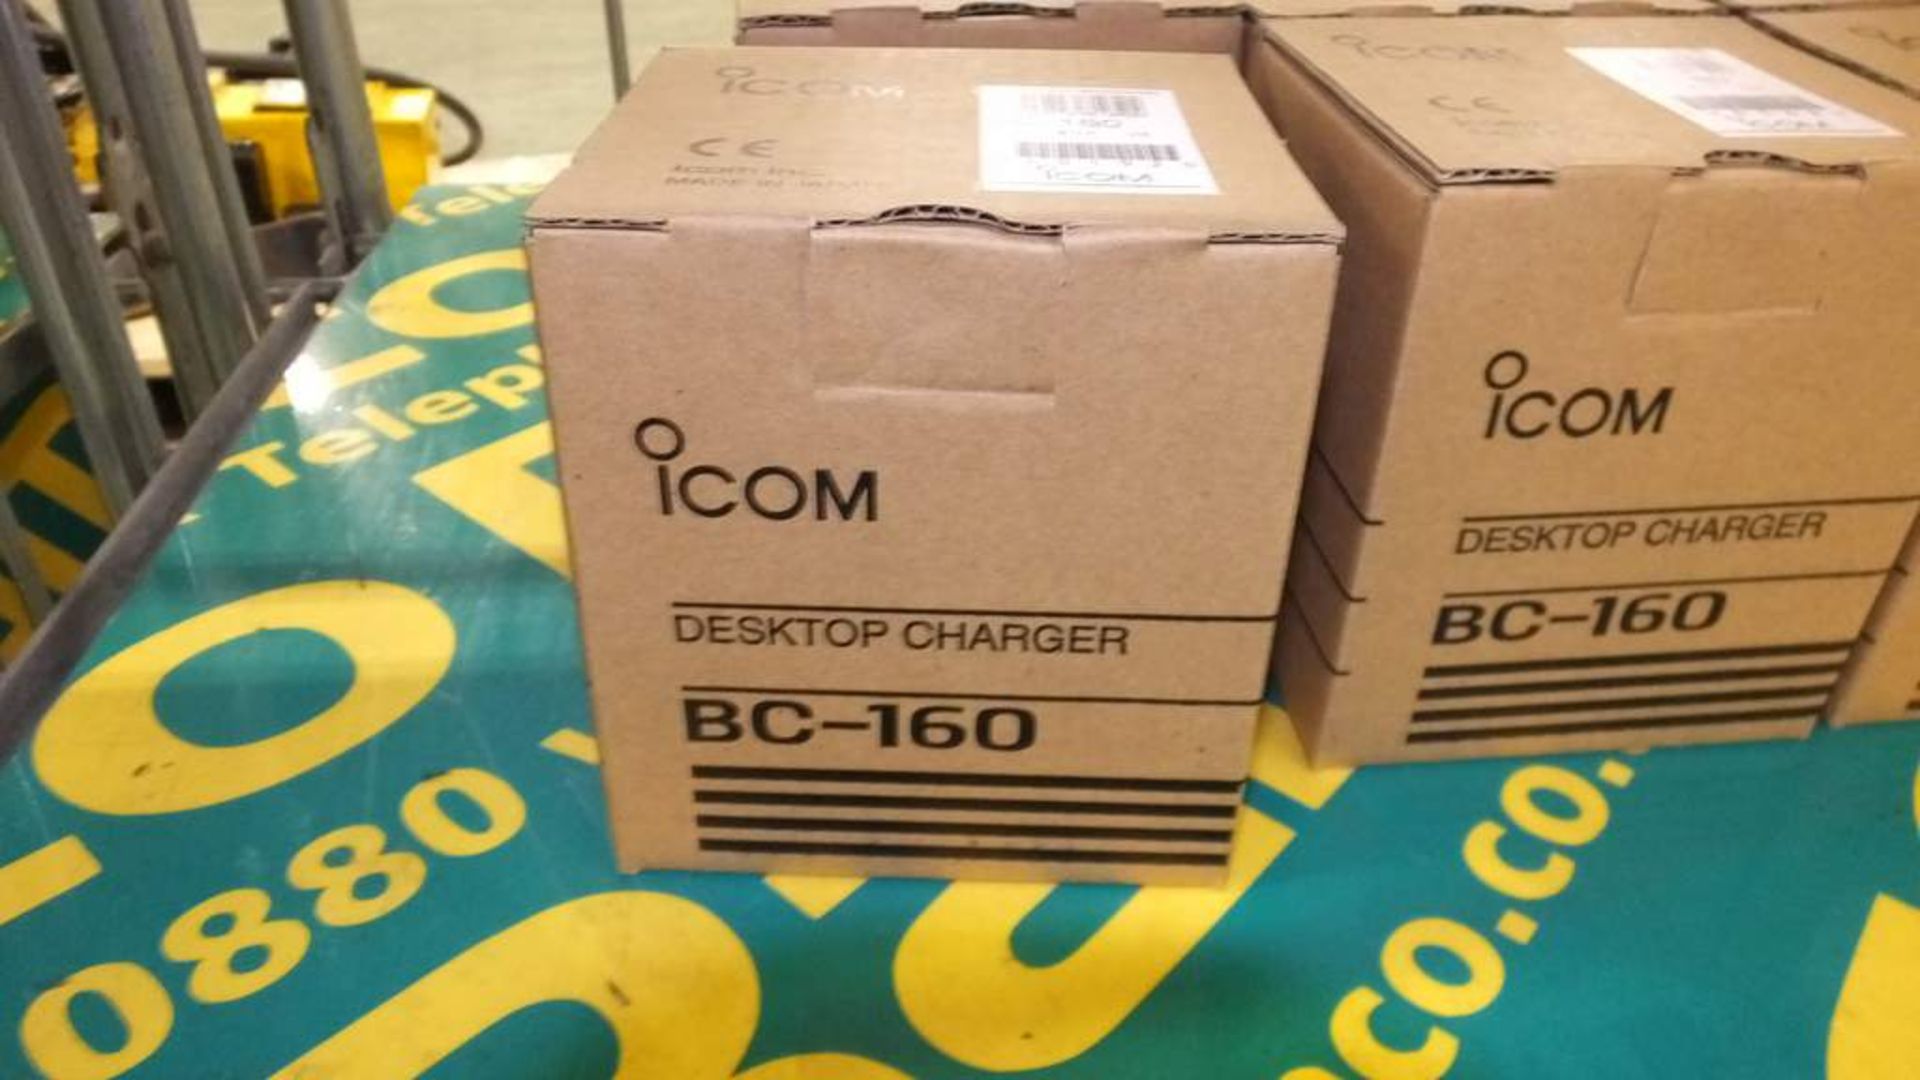 10x Icom BC-160 desktop charger - Image 2 of 3